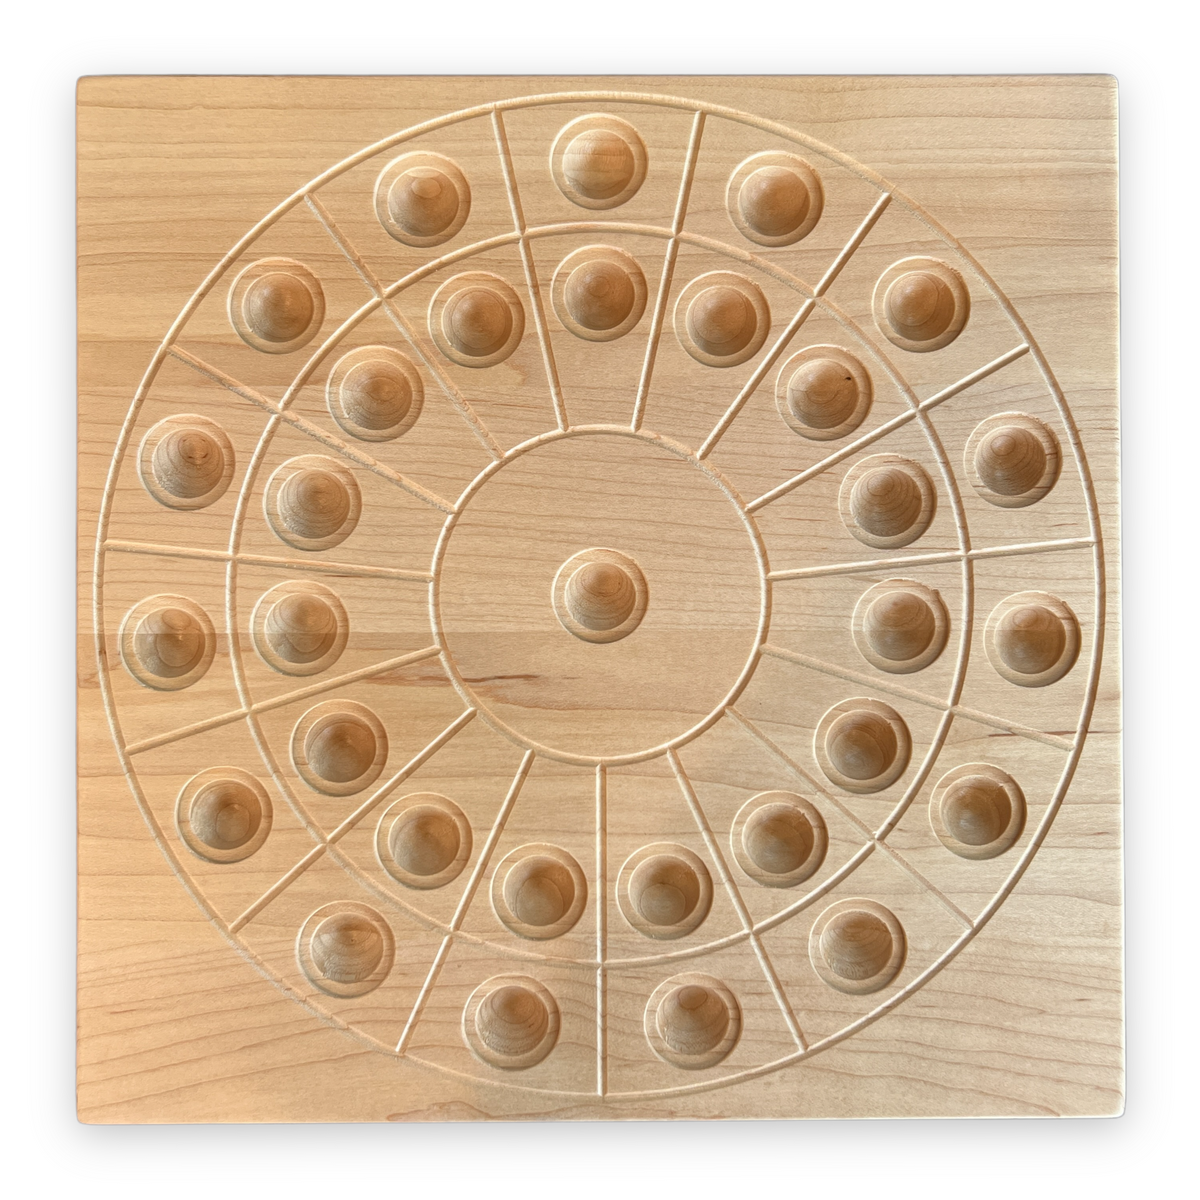 Multiplication Circle Tray 15x15